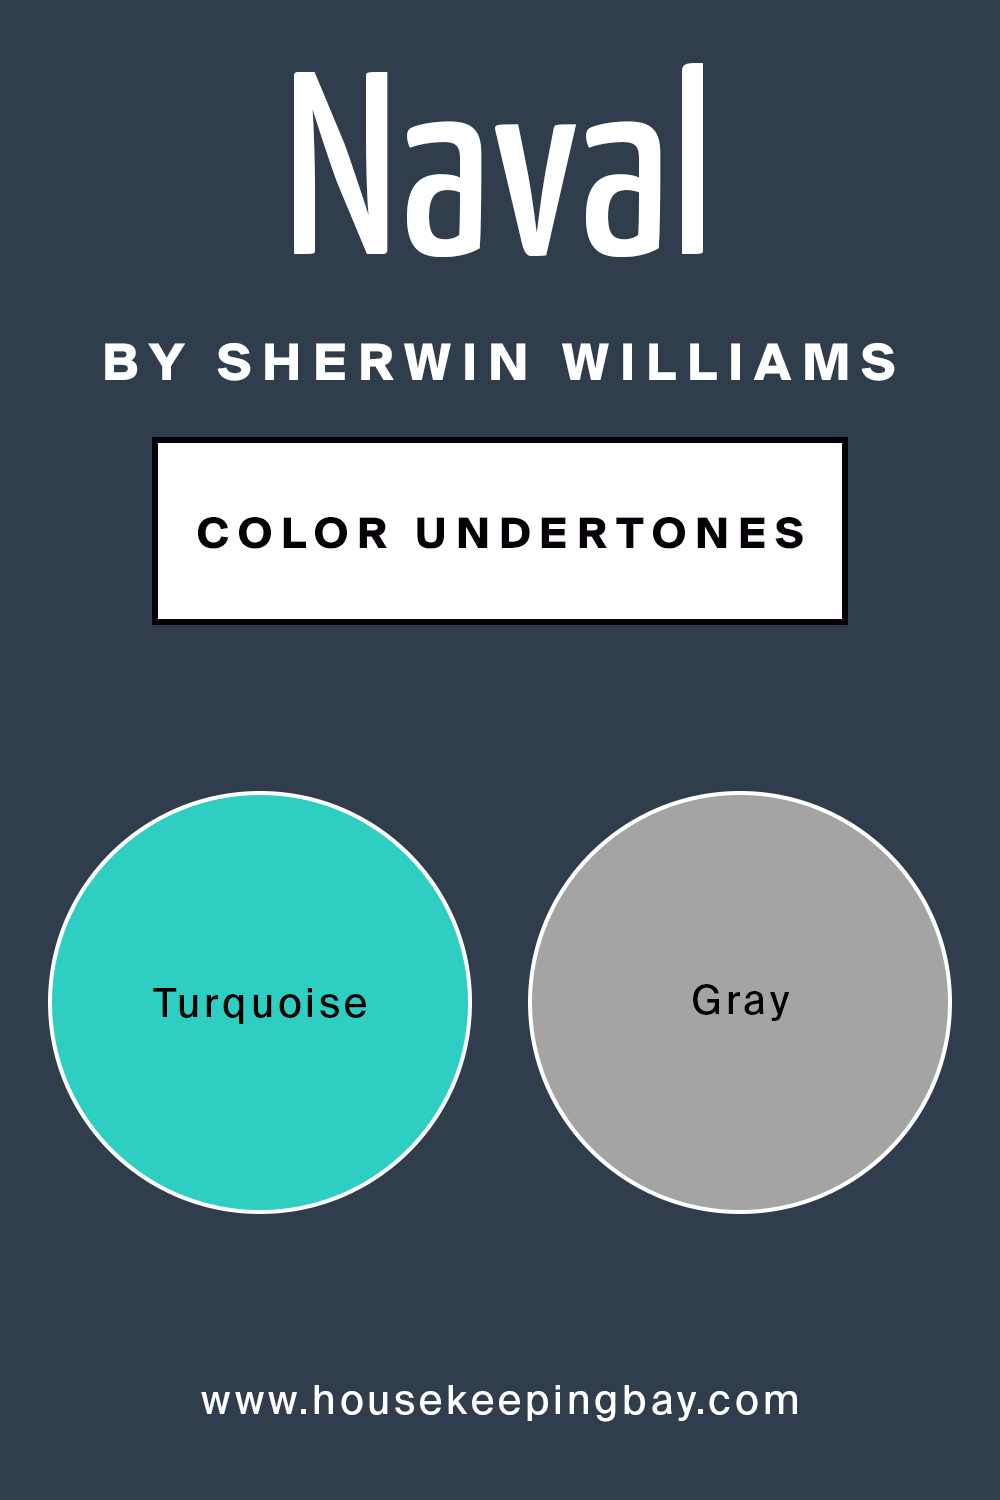 Naval by Sherwin Williams Color Undertones